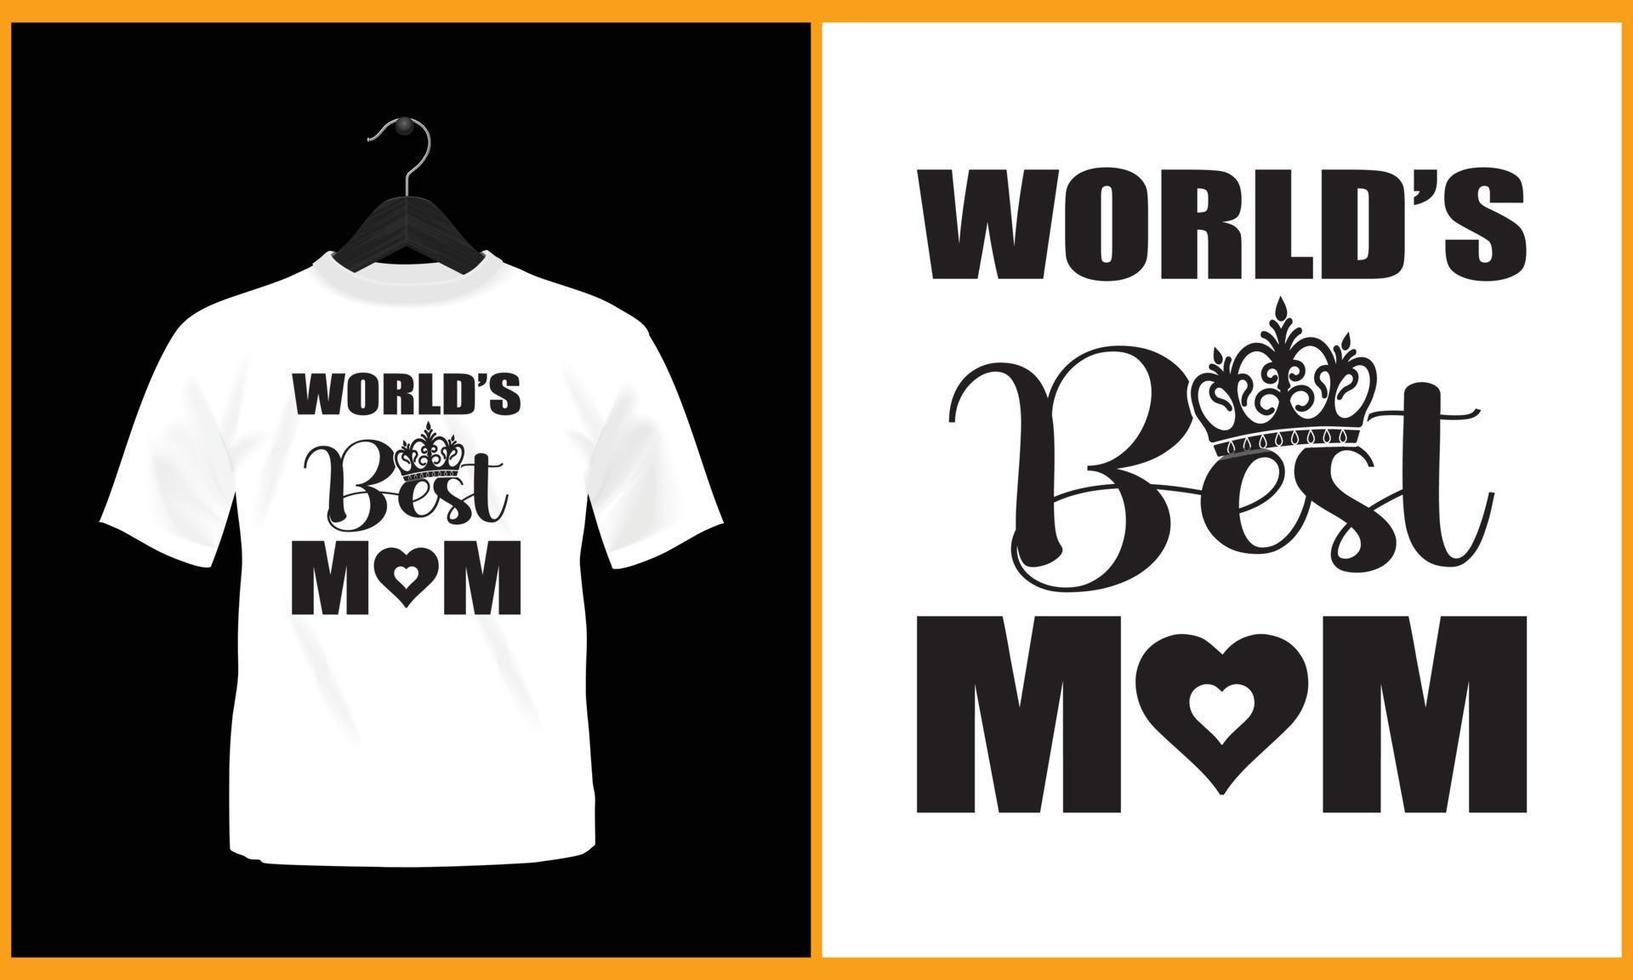 World's best mom - Vector t shirt design